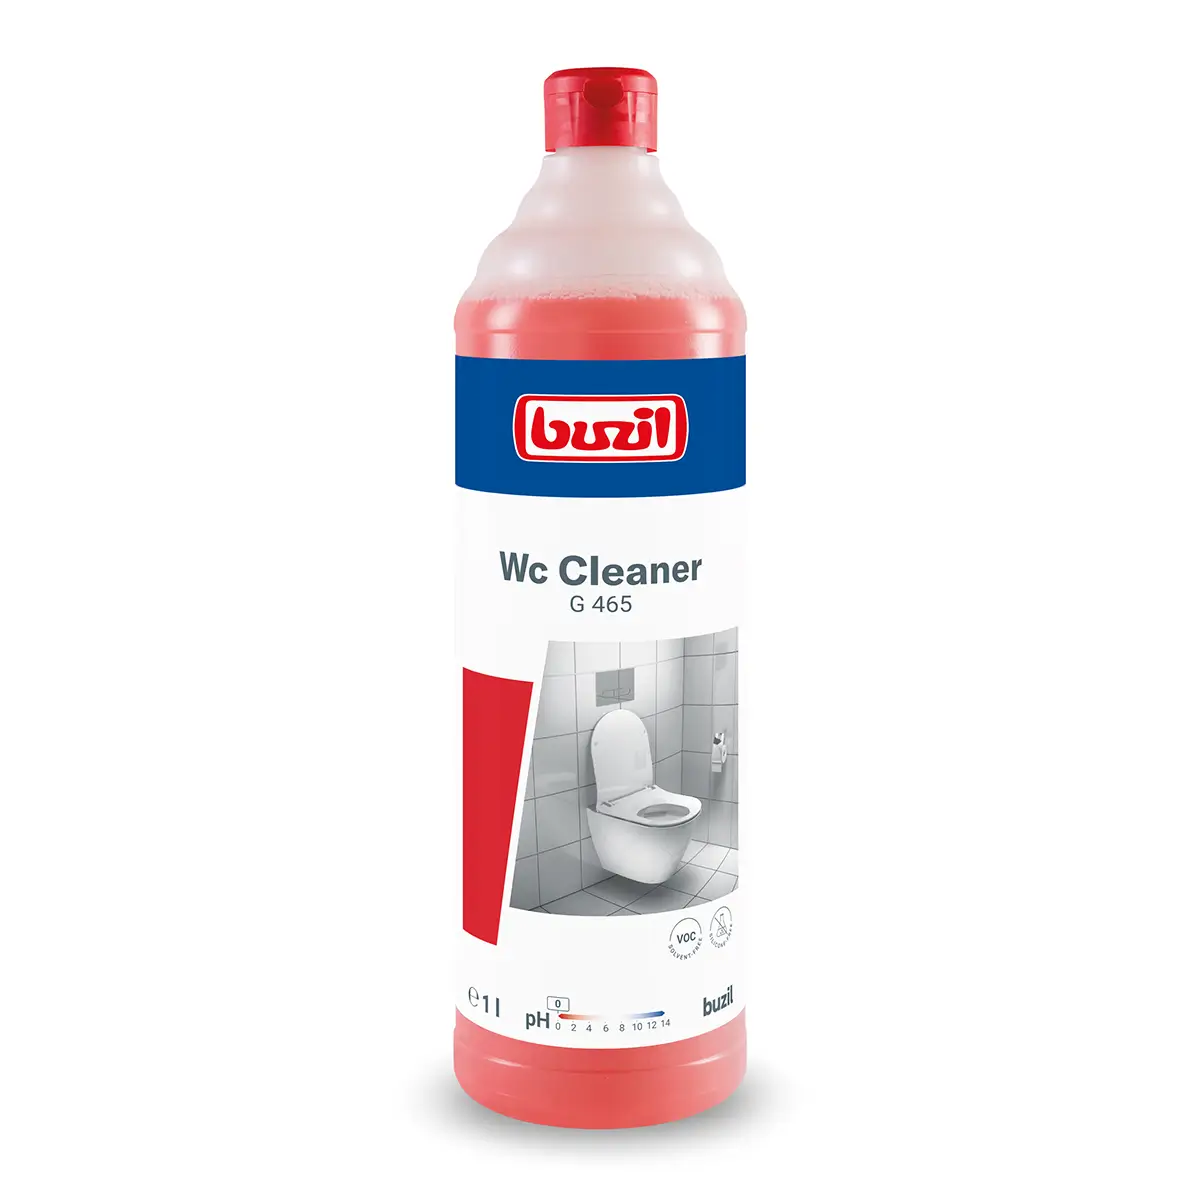 Buzil WC Cleaner G465 Sanitärgrundreiniger 1l